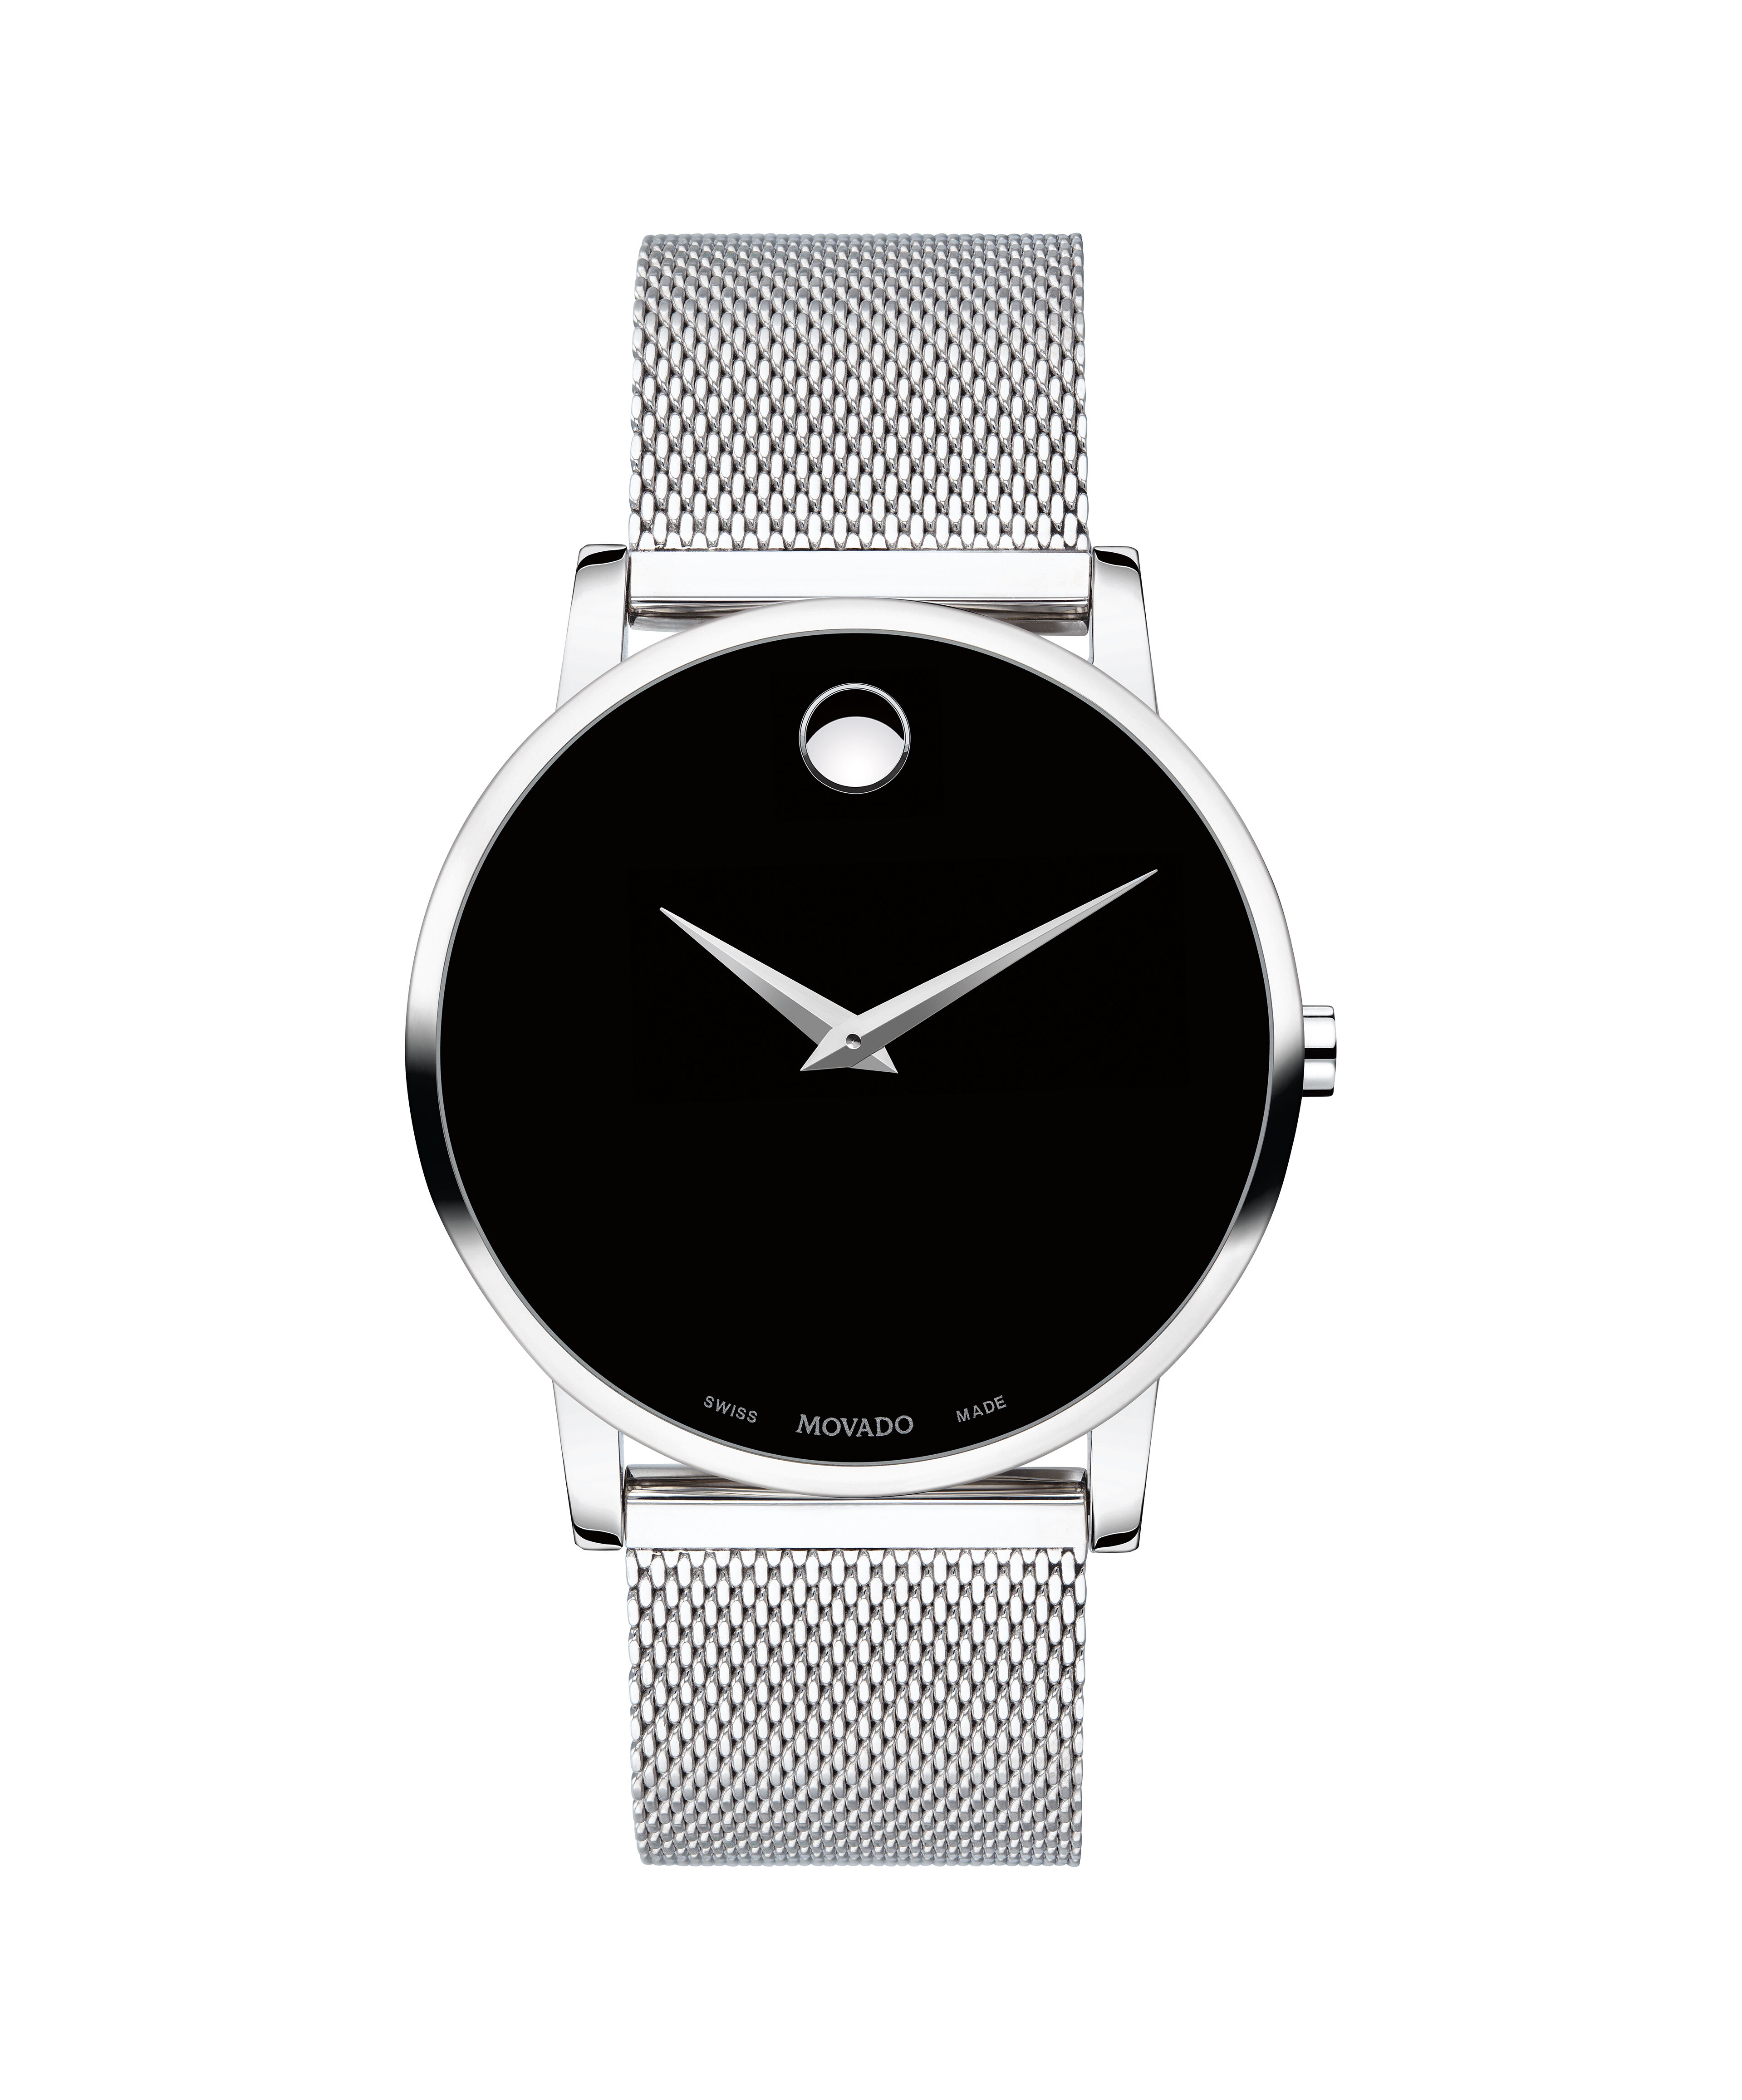 Cartier Silver Chronograph Replica Watch